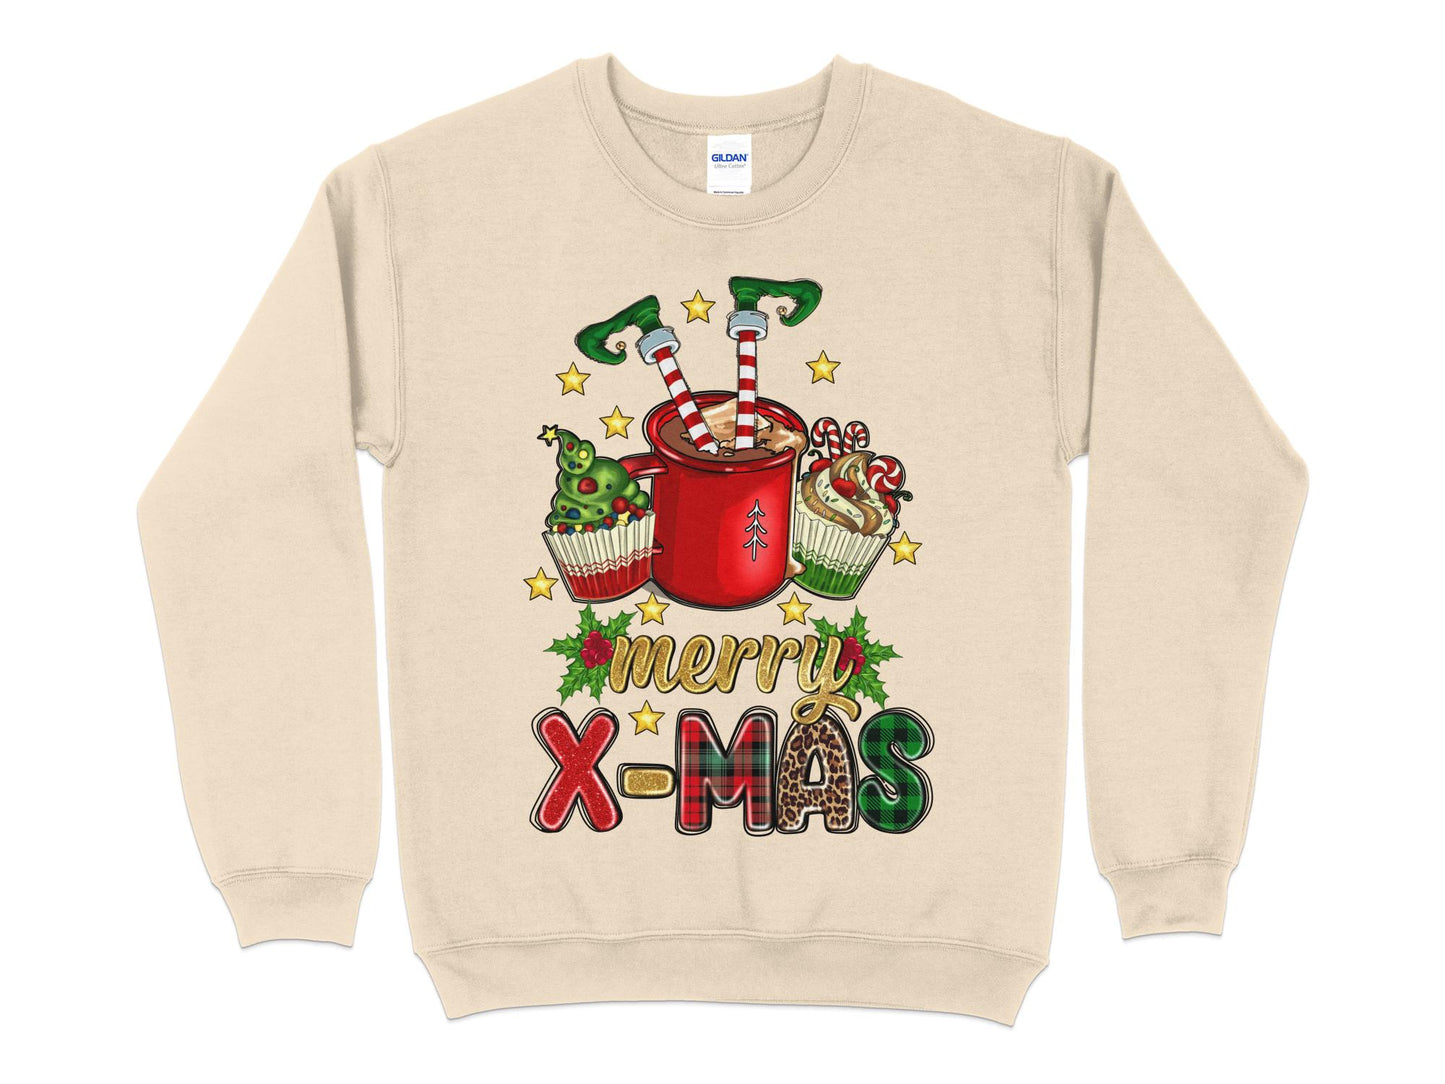 Merry Christmas Elf in Cup Sweatshirt, Funny Christmas Shirt for Women, Christmas Crewneck, funny Holiday Sweater, Plus Size Options - Mardonyx Sweatshirt S / Sand